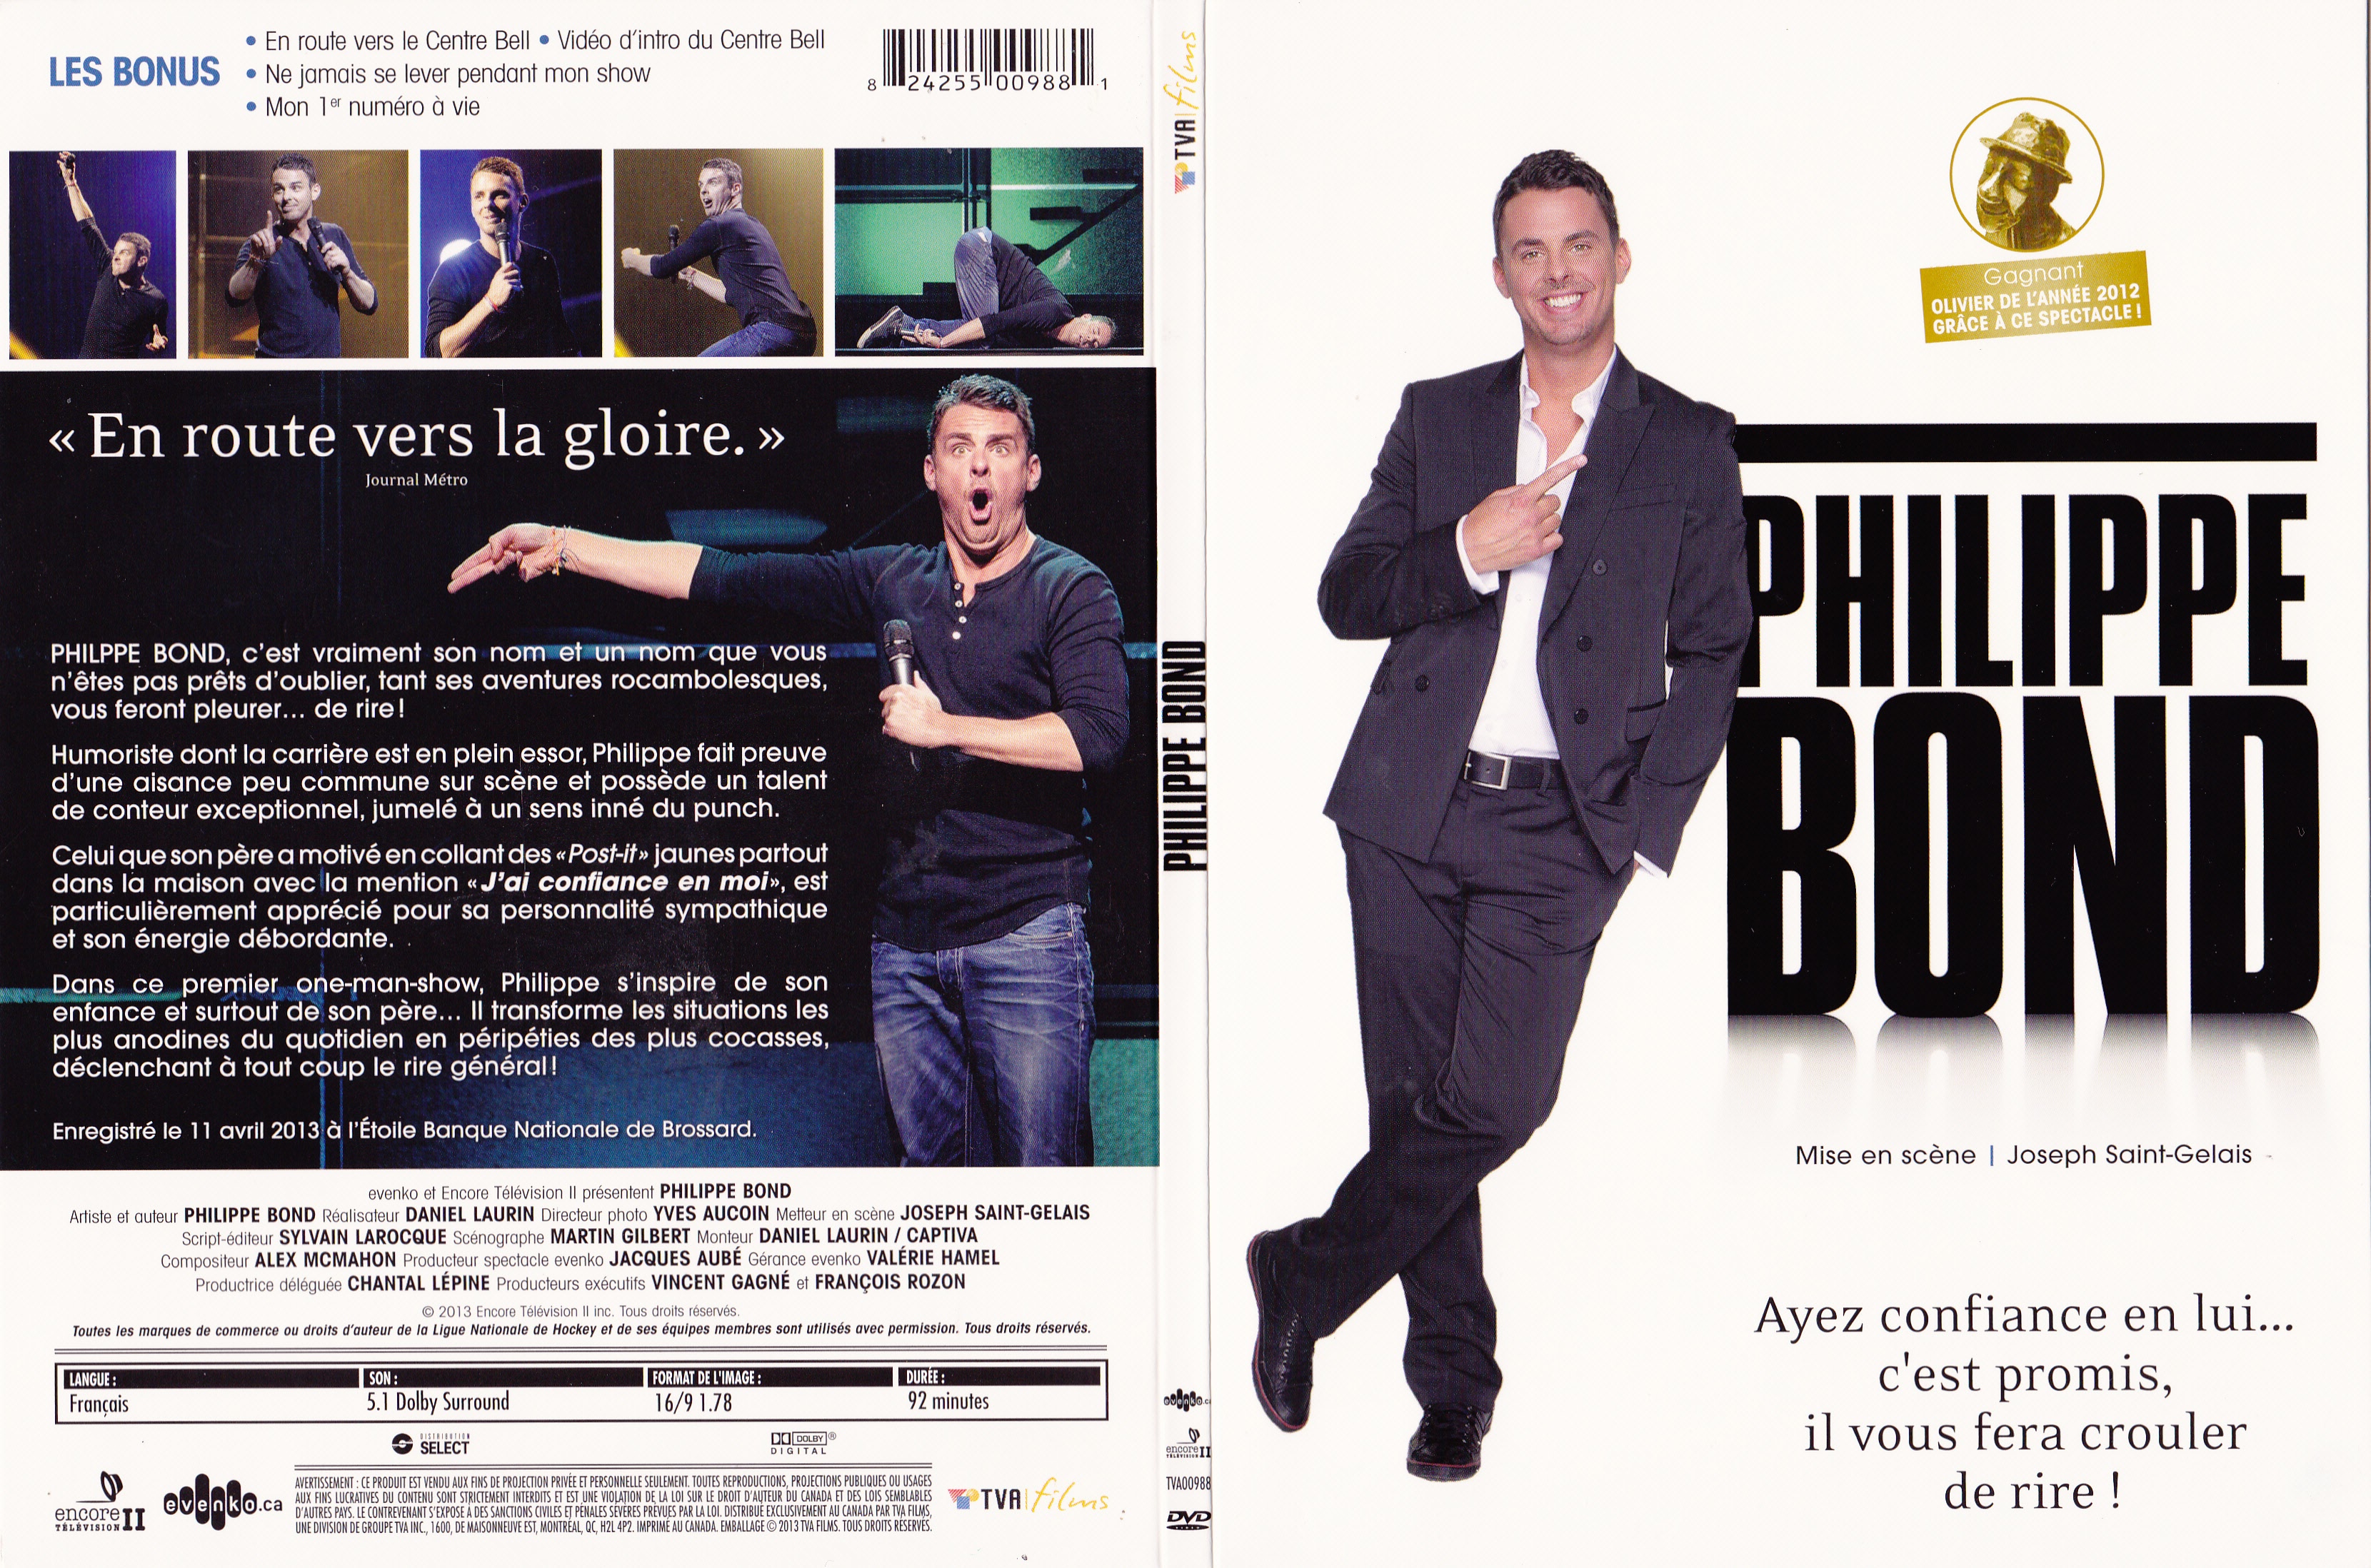 Jaquette DVD Philippe Bond (Canadienne)